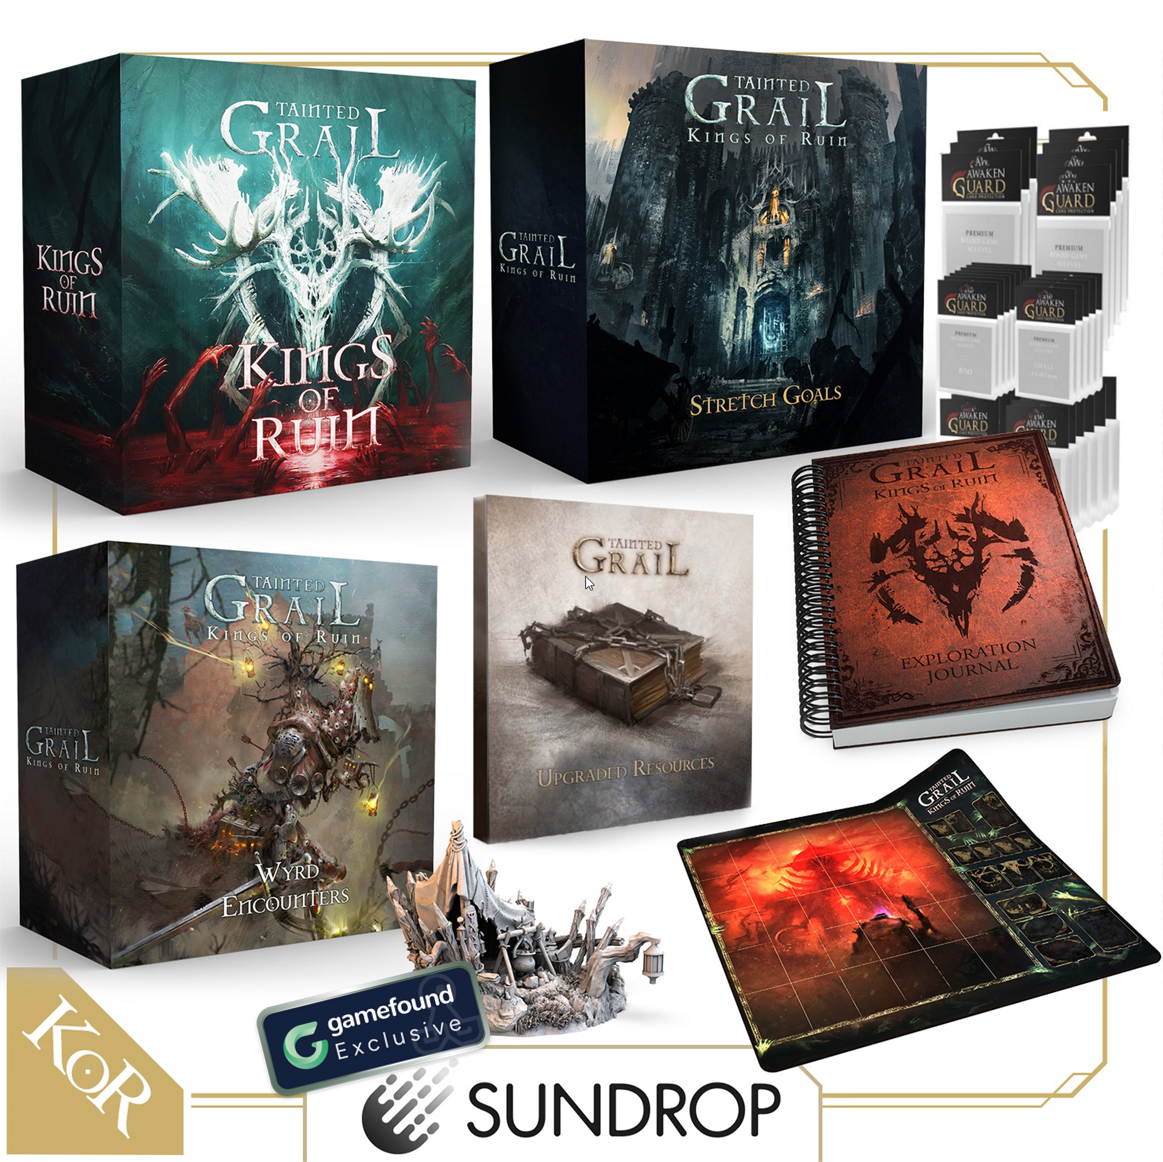 Gamefound Exclusive Tainted Grail Grail Pledge, Sundrop Edition